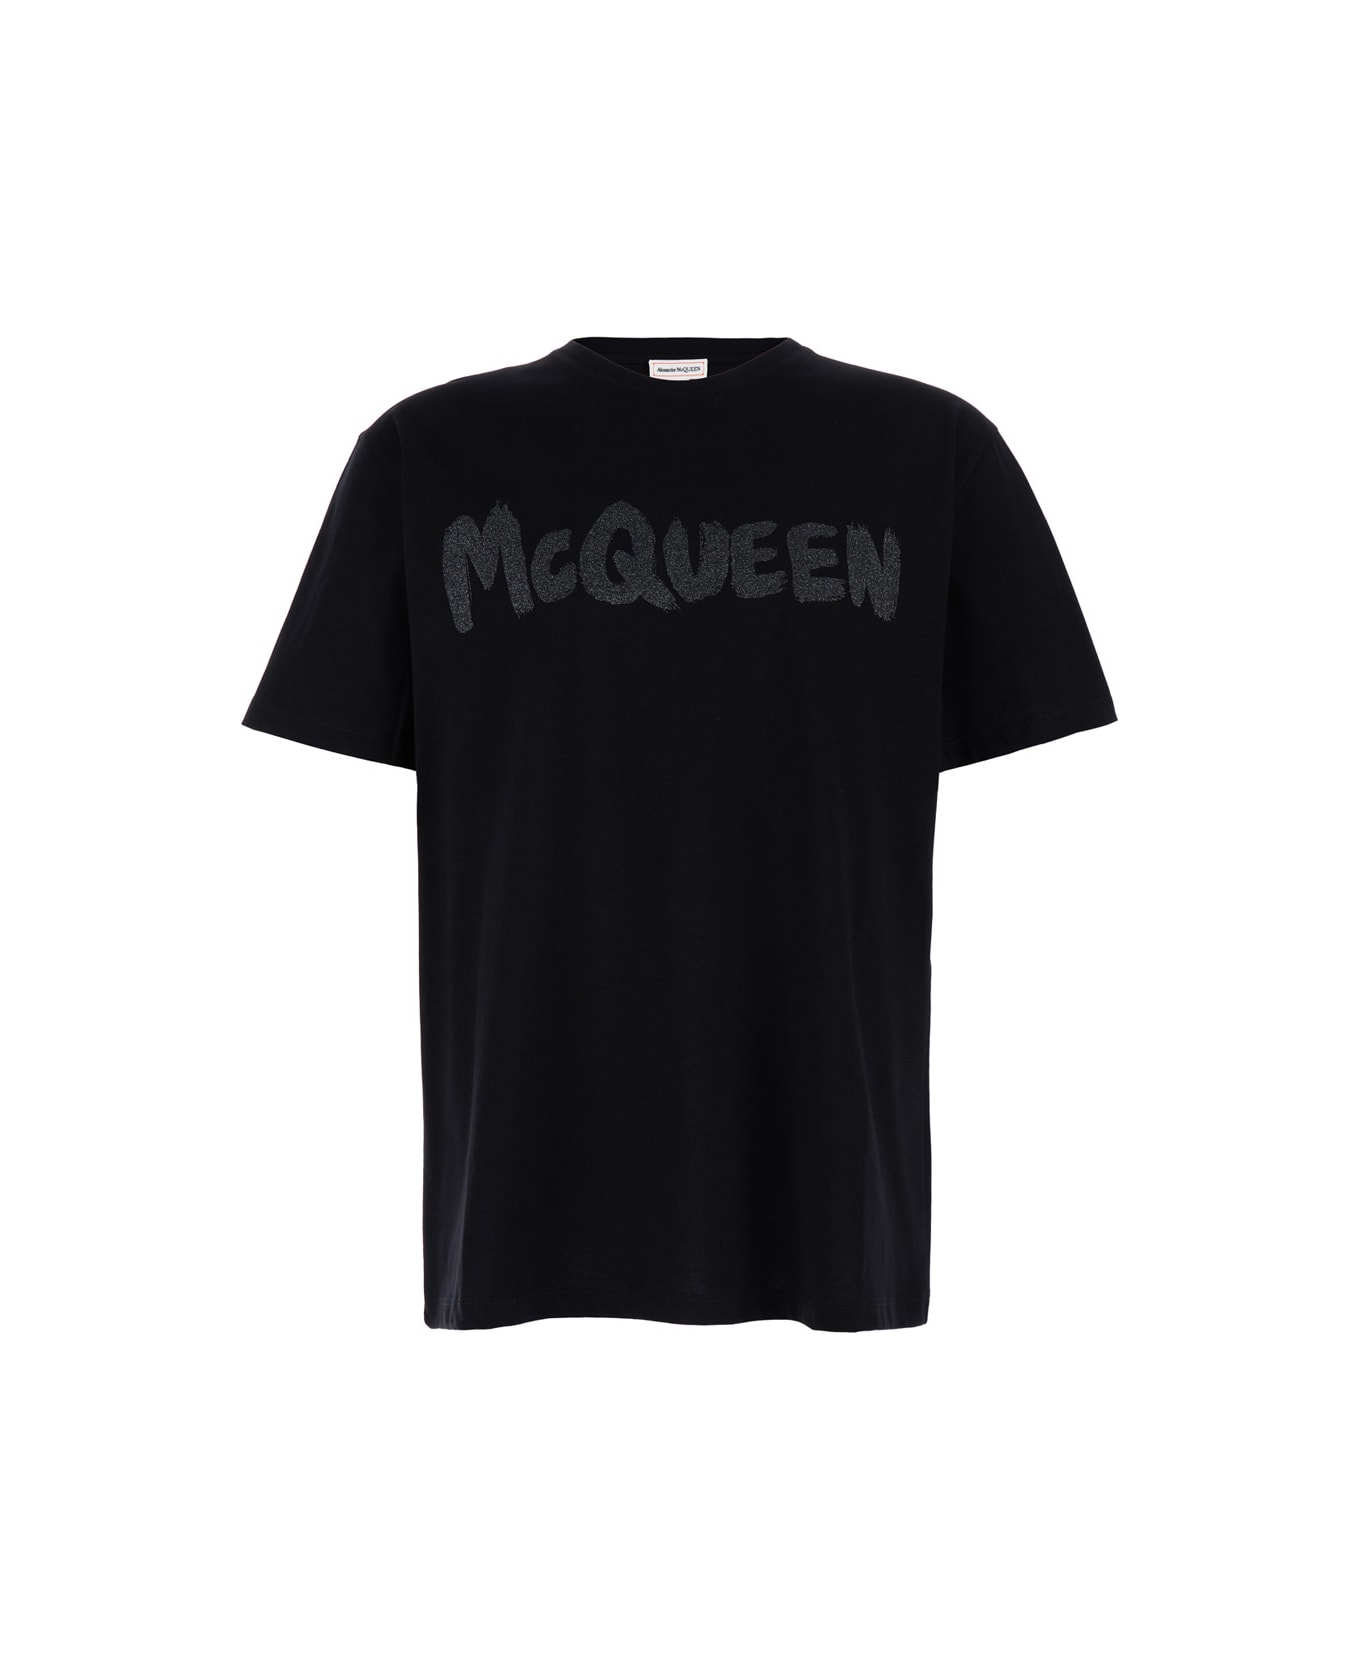 Alexander McQueen Black T-shirt With Glitter Logo Print In Cotton Man - Black シャツ